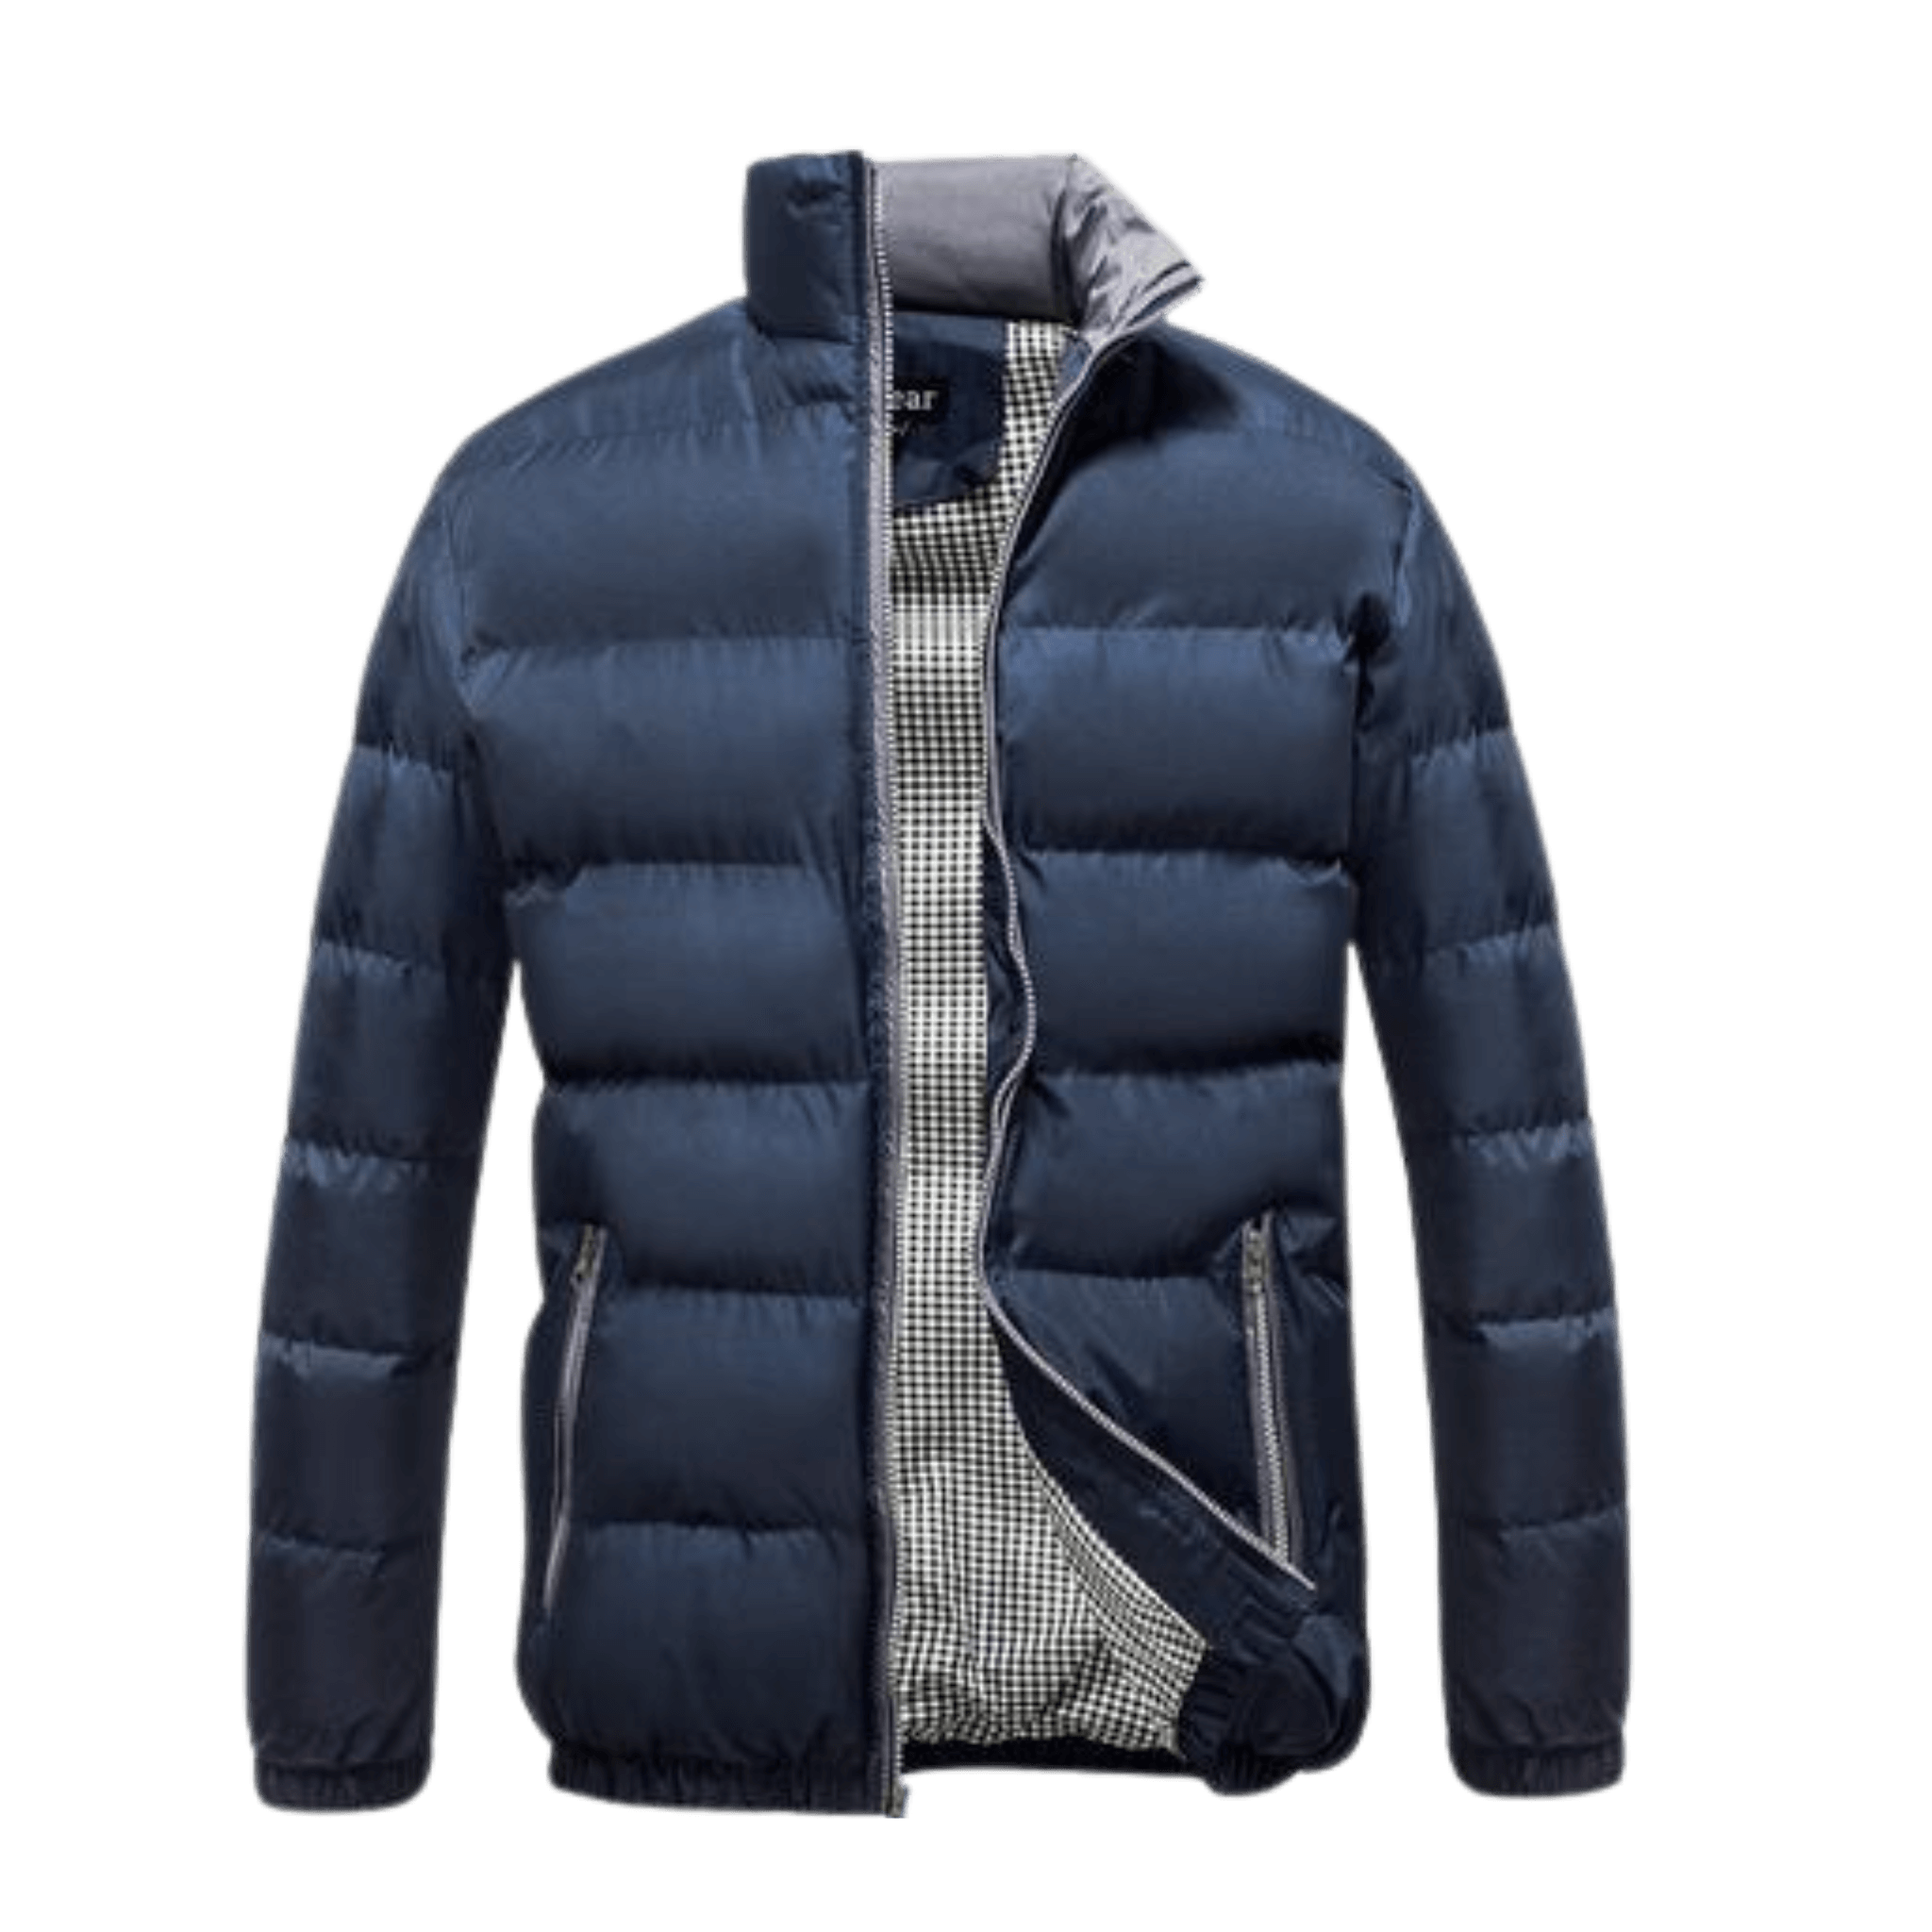 Men’s Winter Coats & Jackets | The Whole Shebang